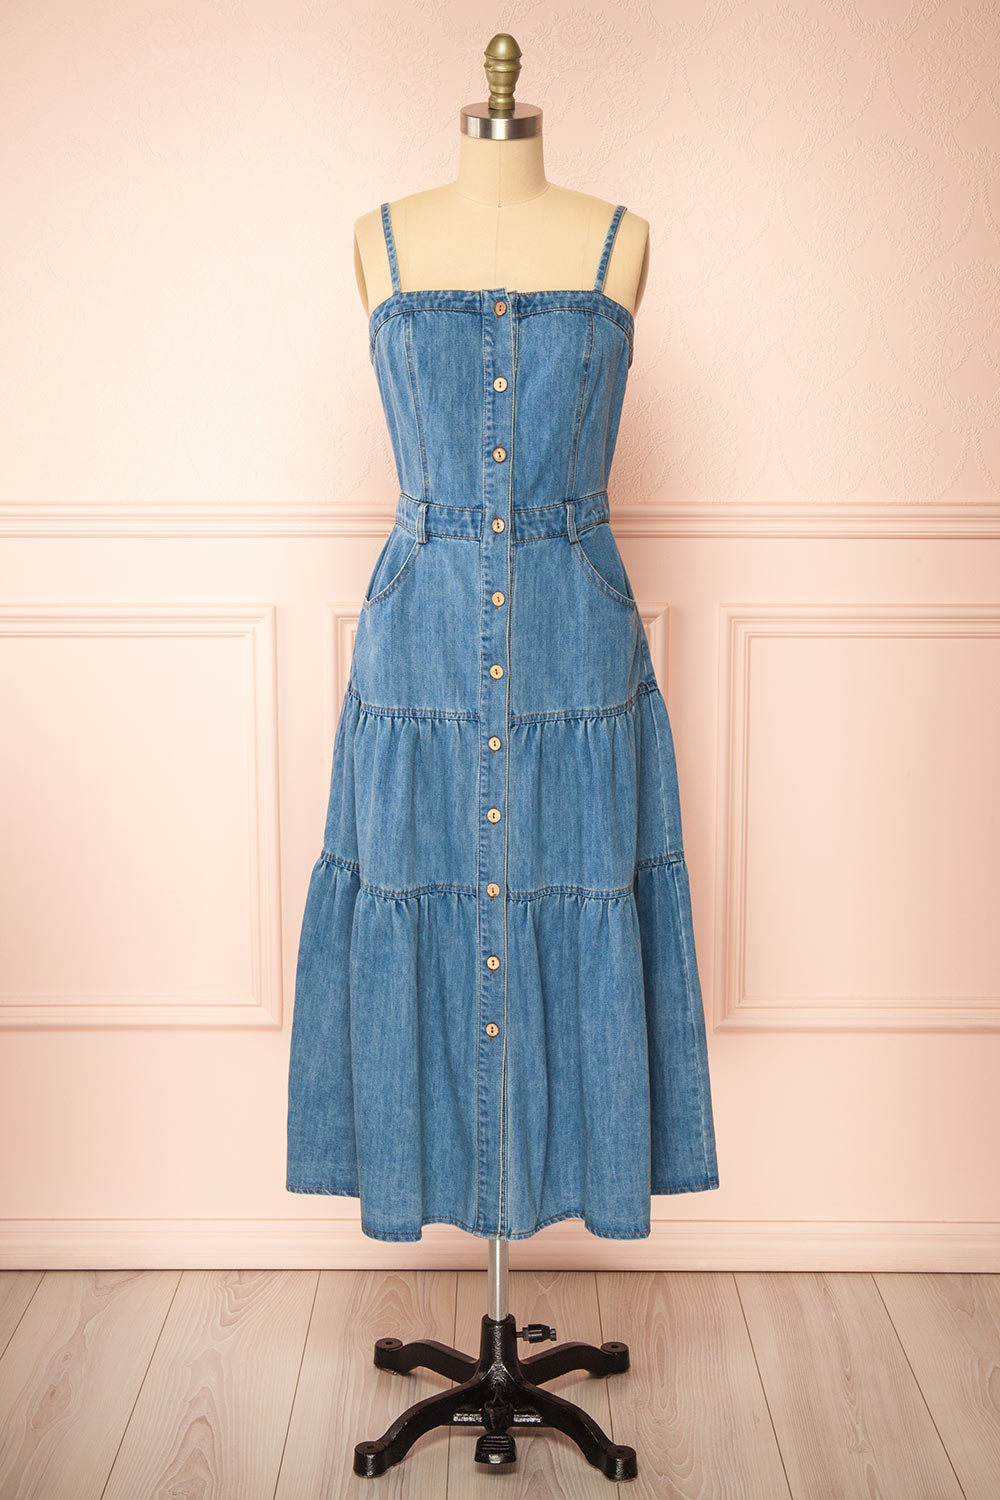 Moprina Long Blue Denim Dress w/ Pockets | Boutique 1861 front view